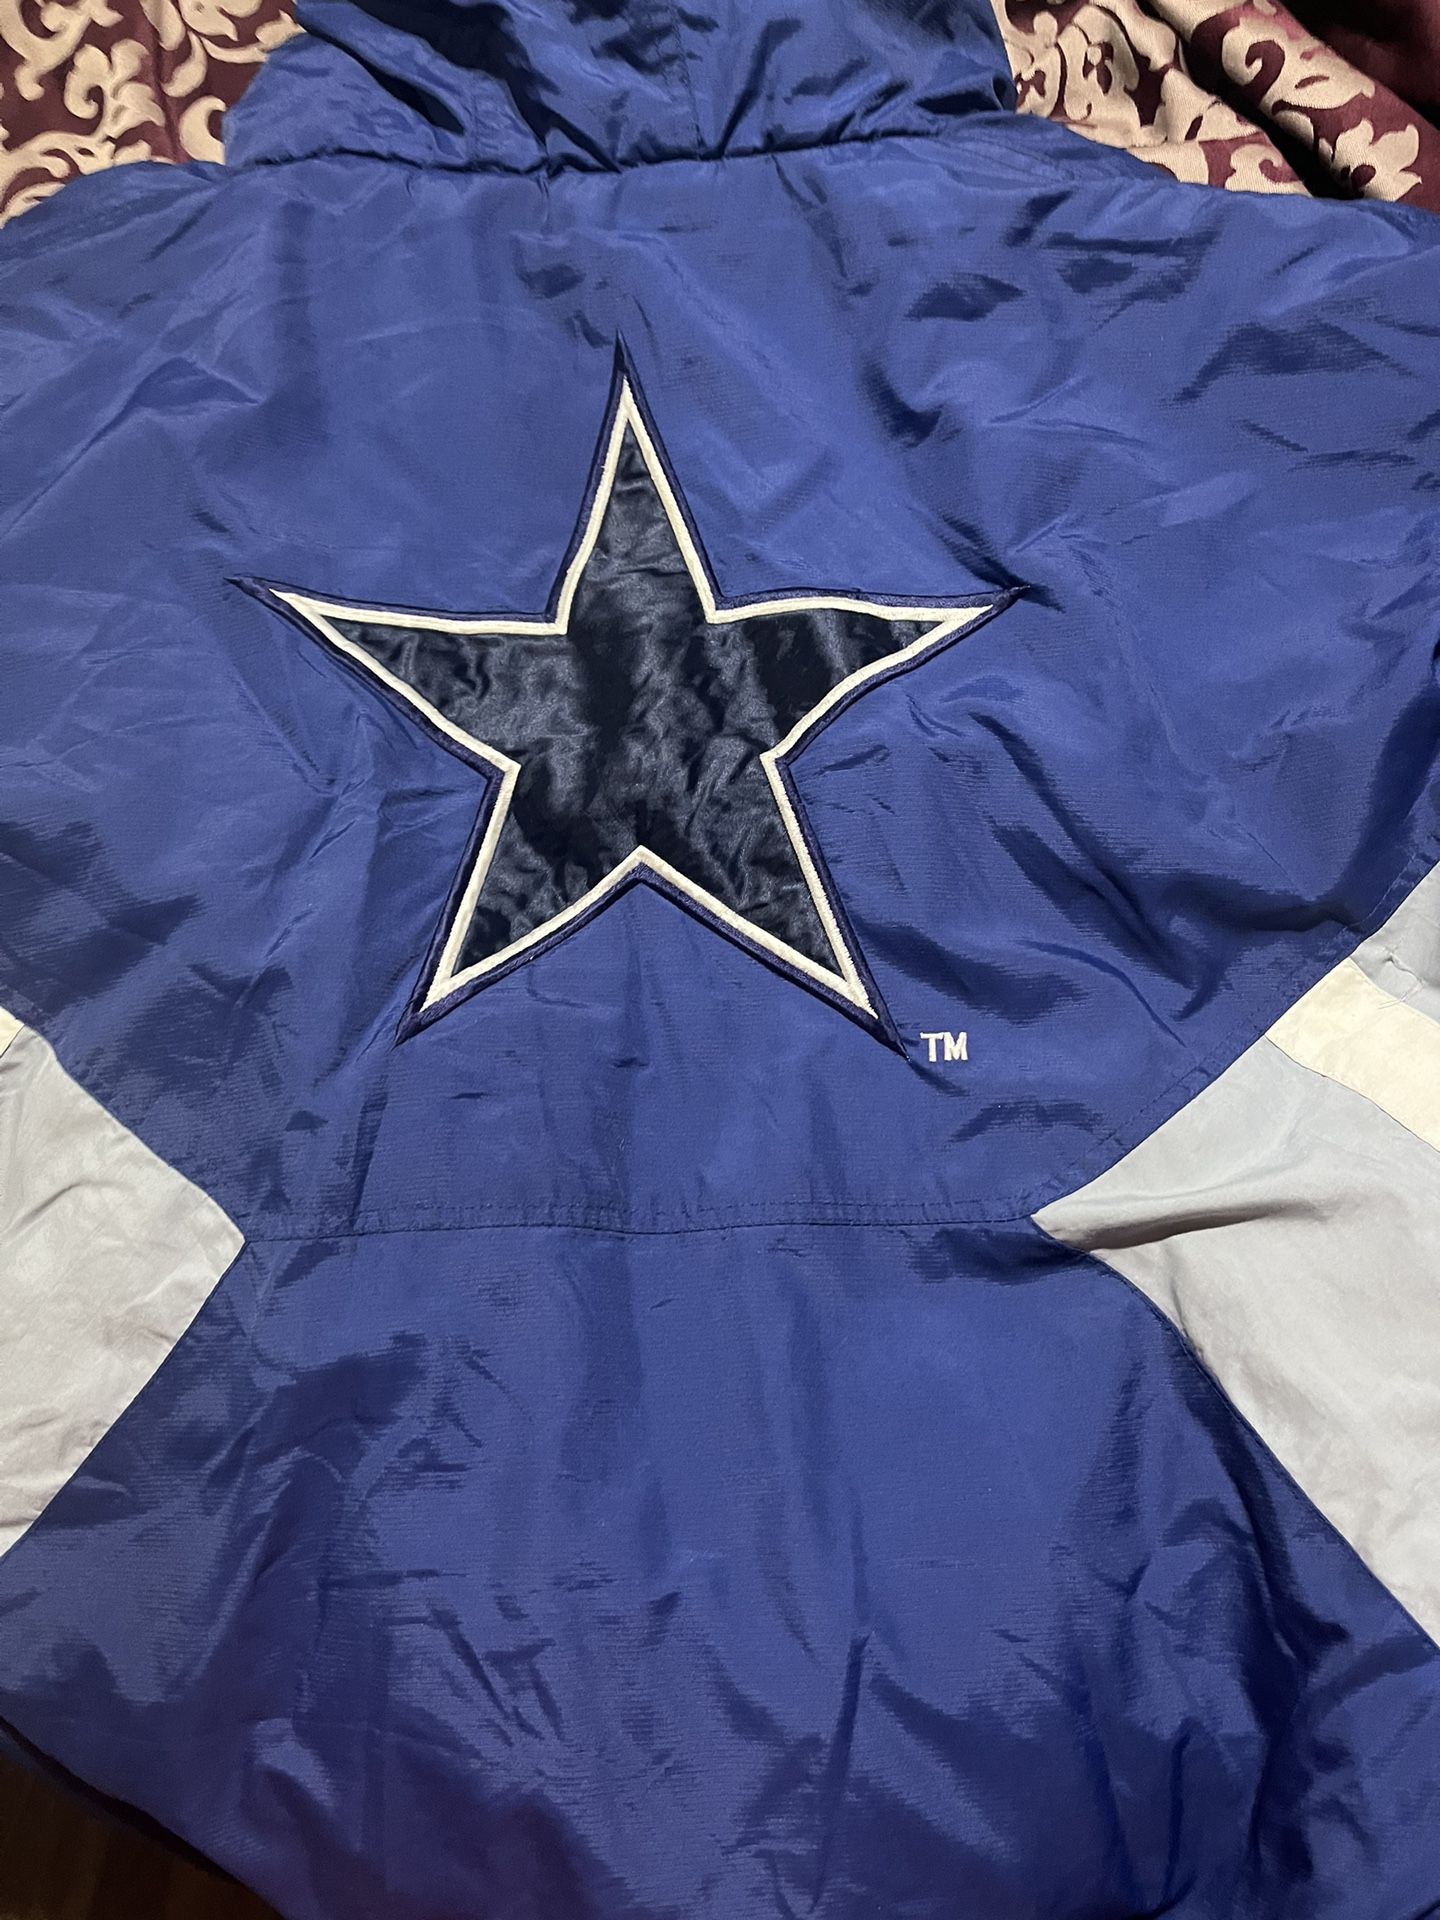 Vintage 90s Dallas Cowboys Starter Jacket for Sale in Ontario, CA - OfferUp